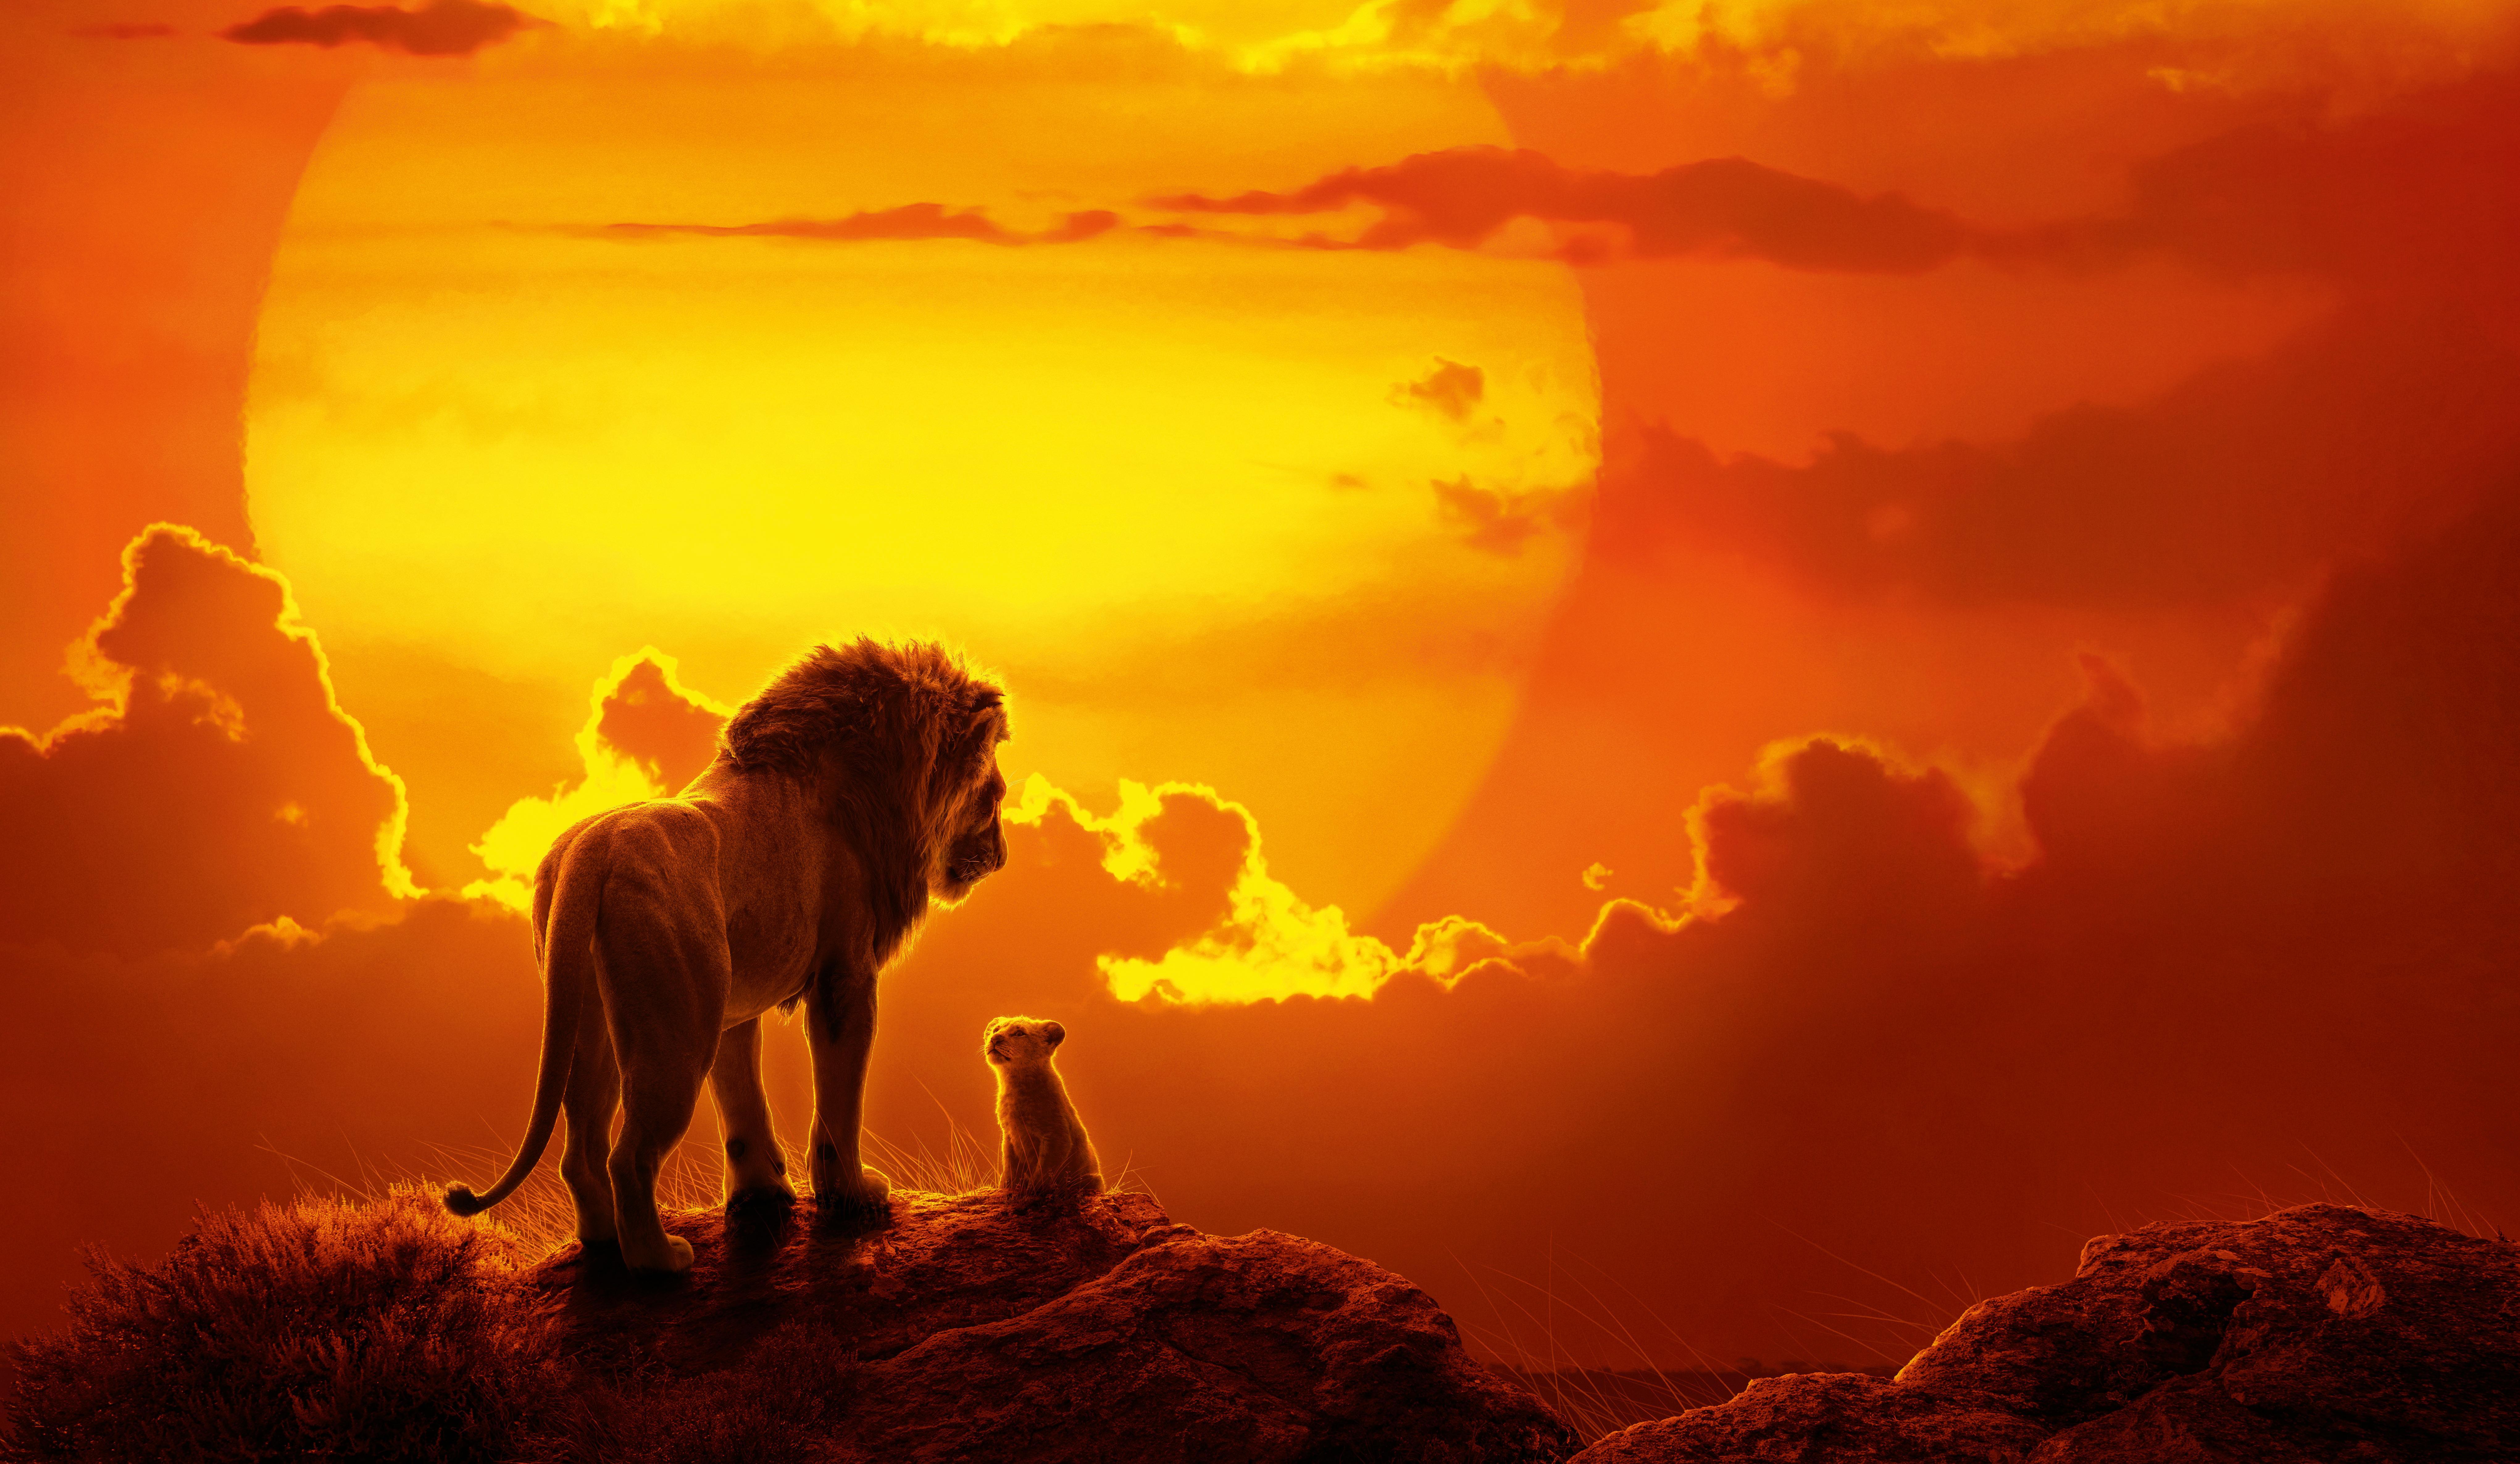 The Lion King (2019) 8k Ultra HD Wallpaper. Background